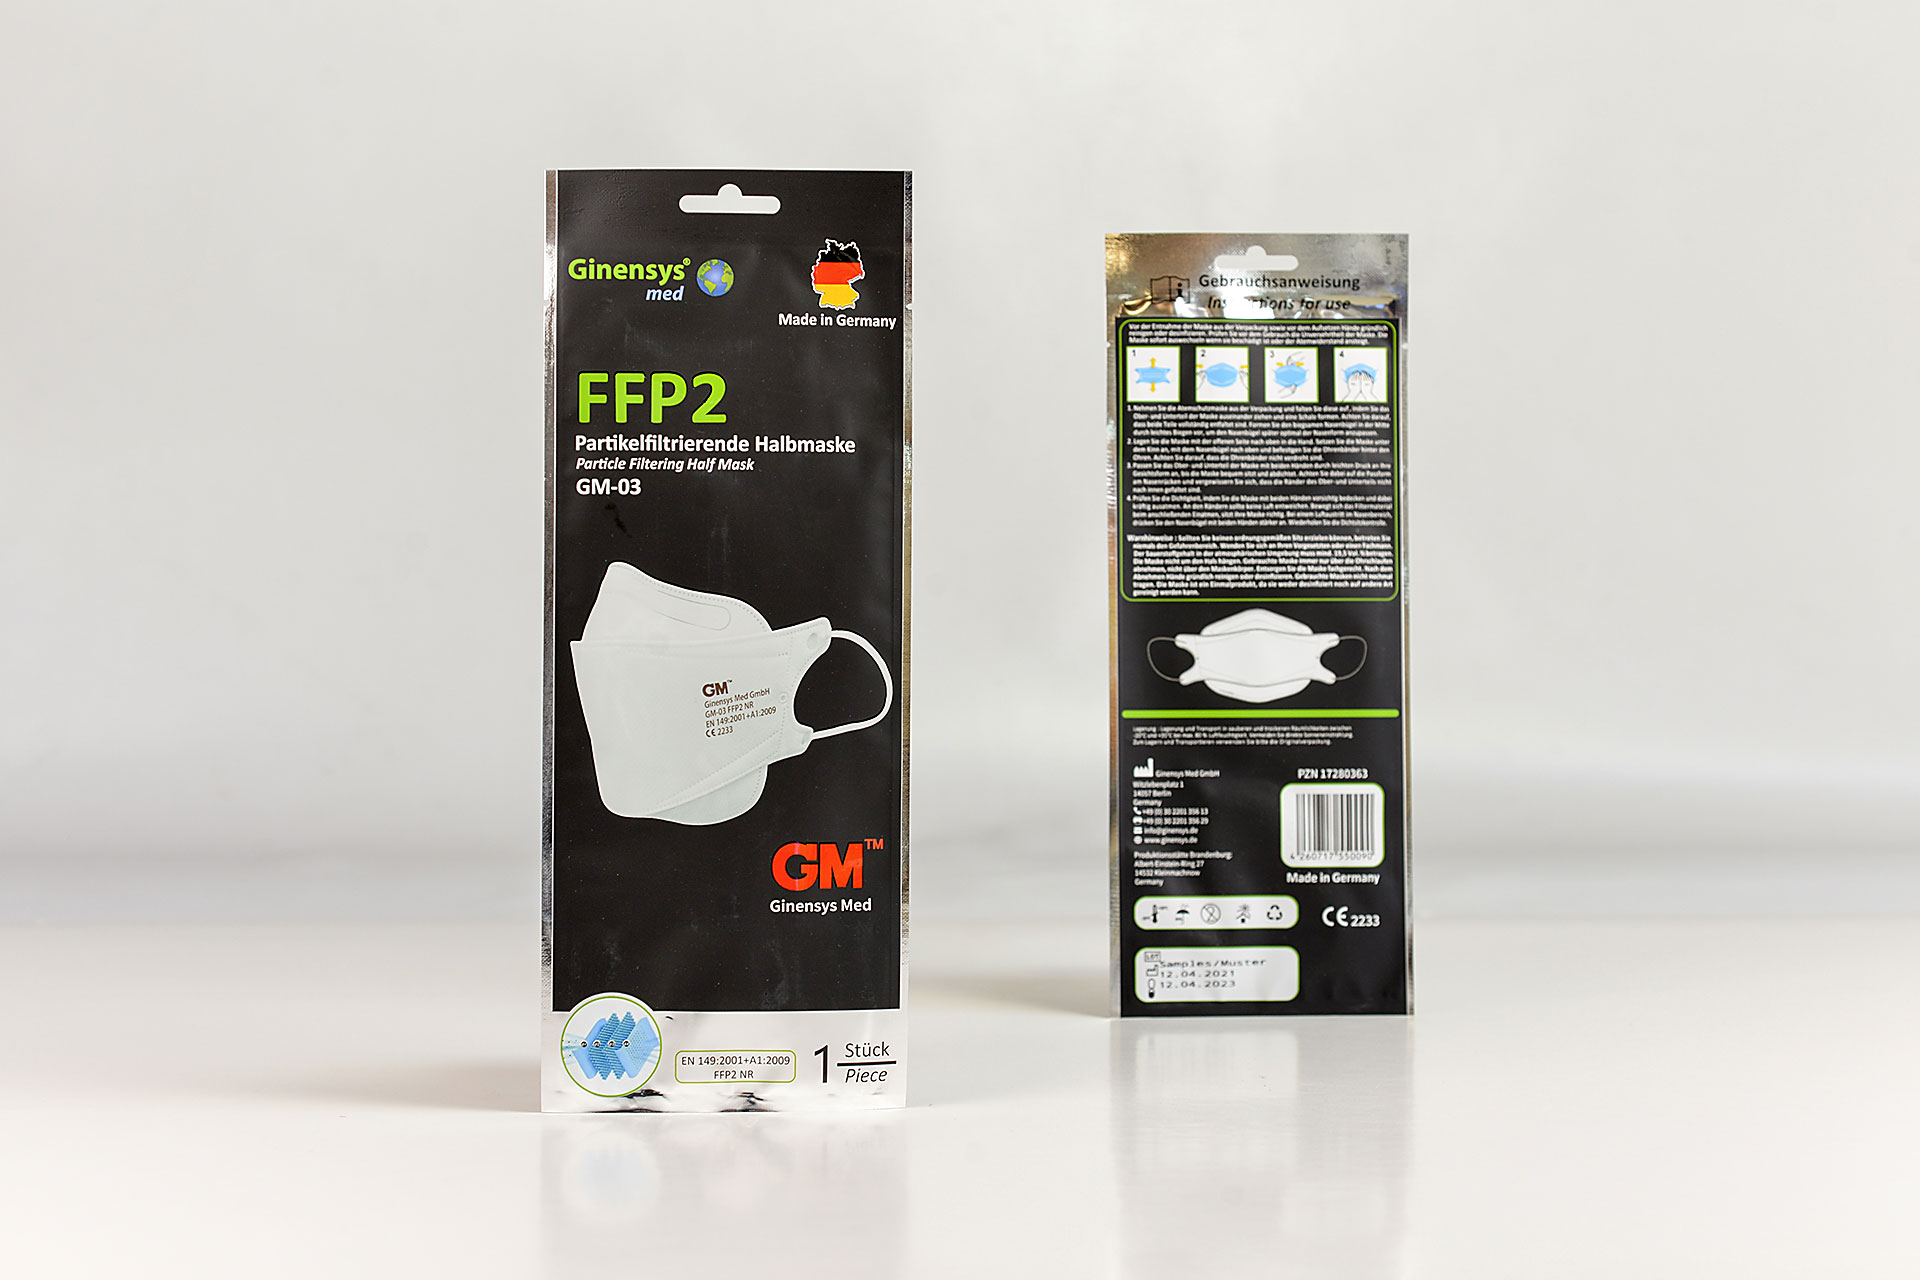 FFP2 partikelfiltrierende Halbmaske GM-03